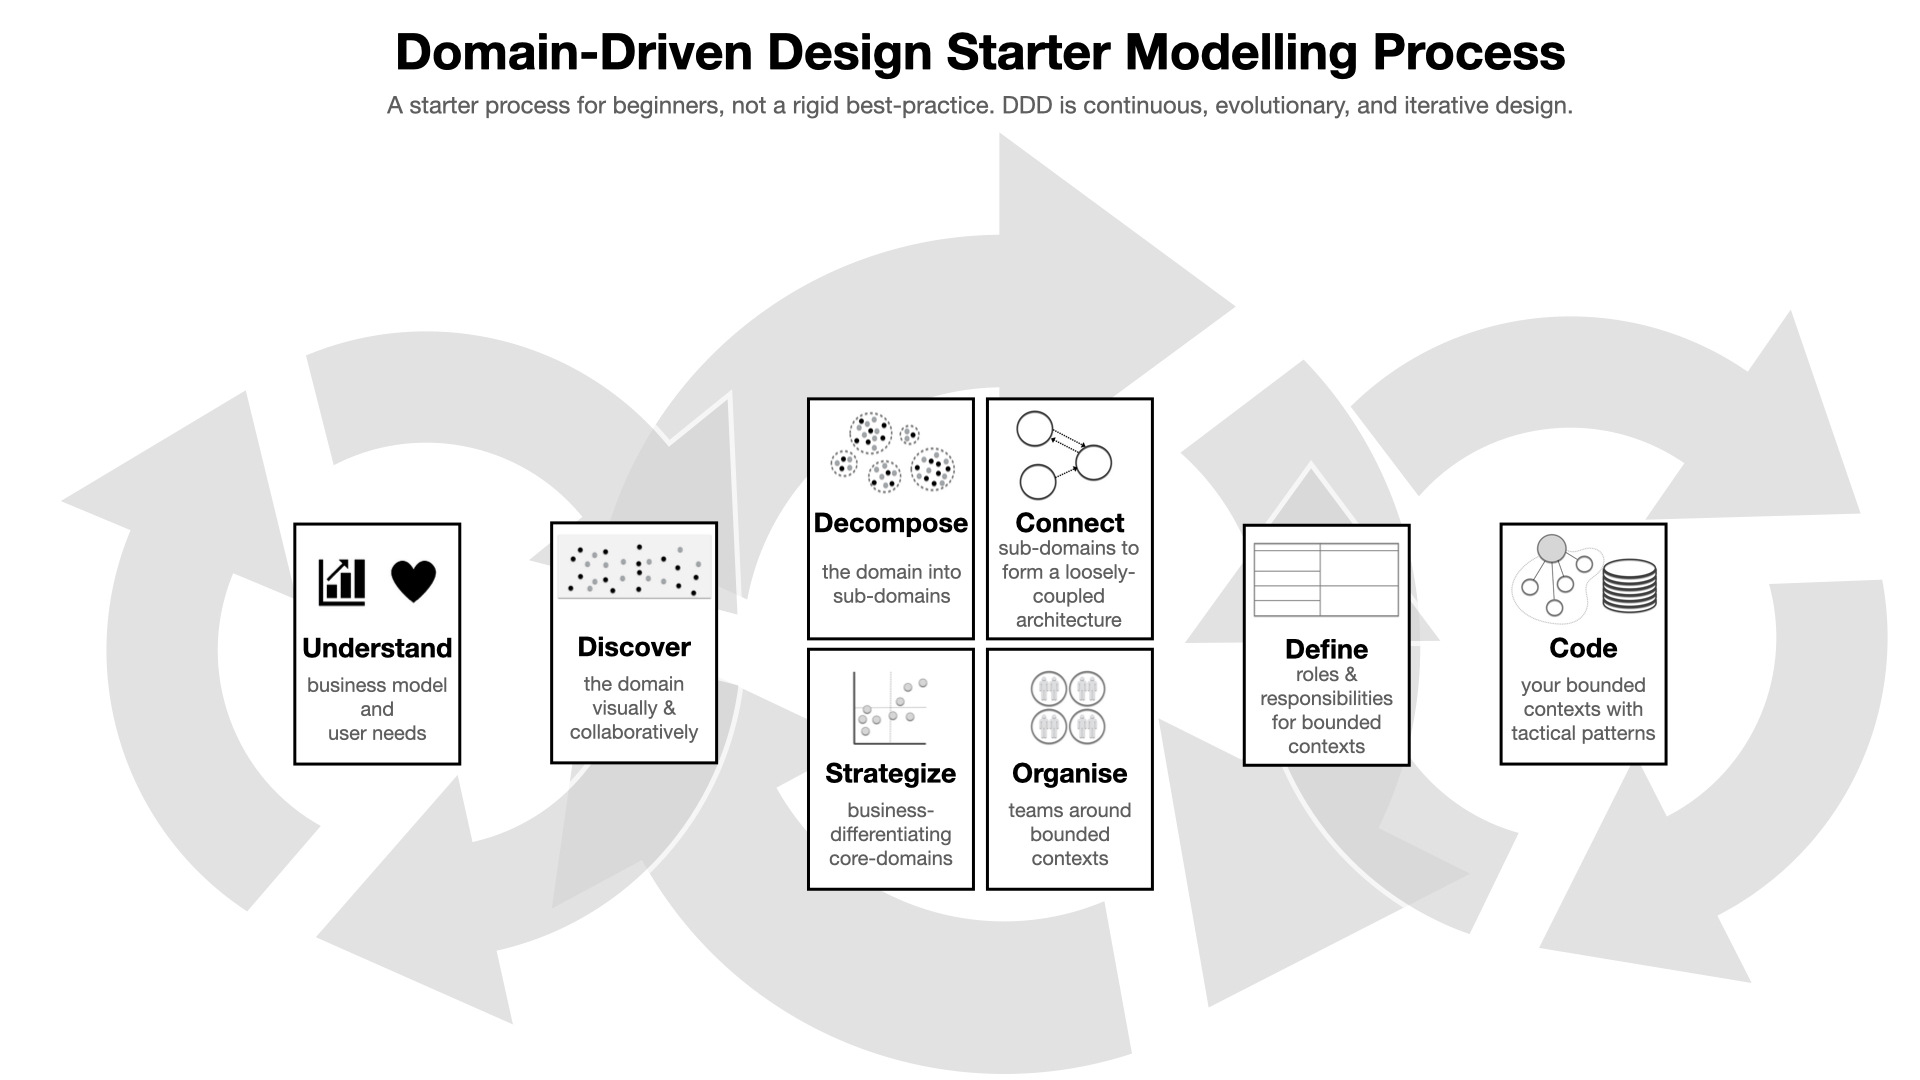 DDD Starter Modelling Process